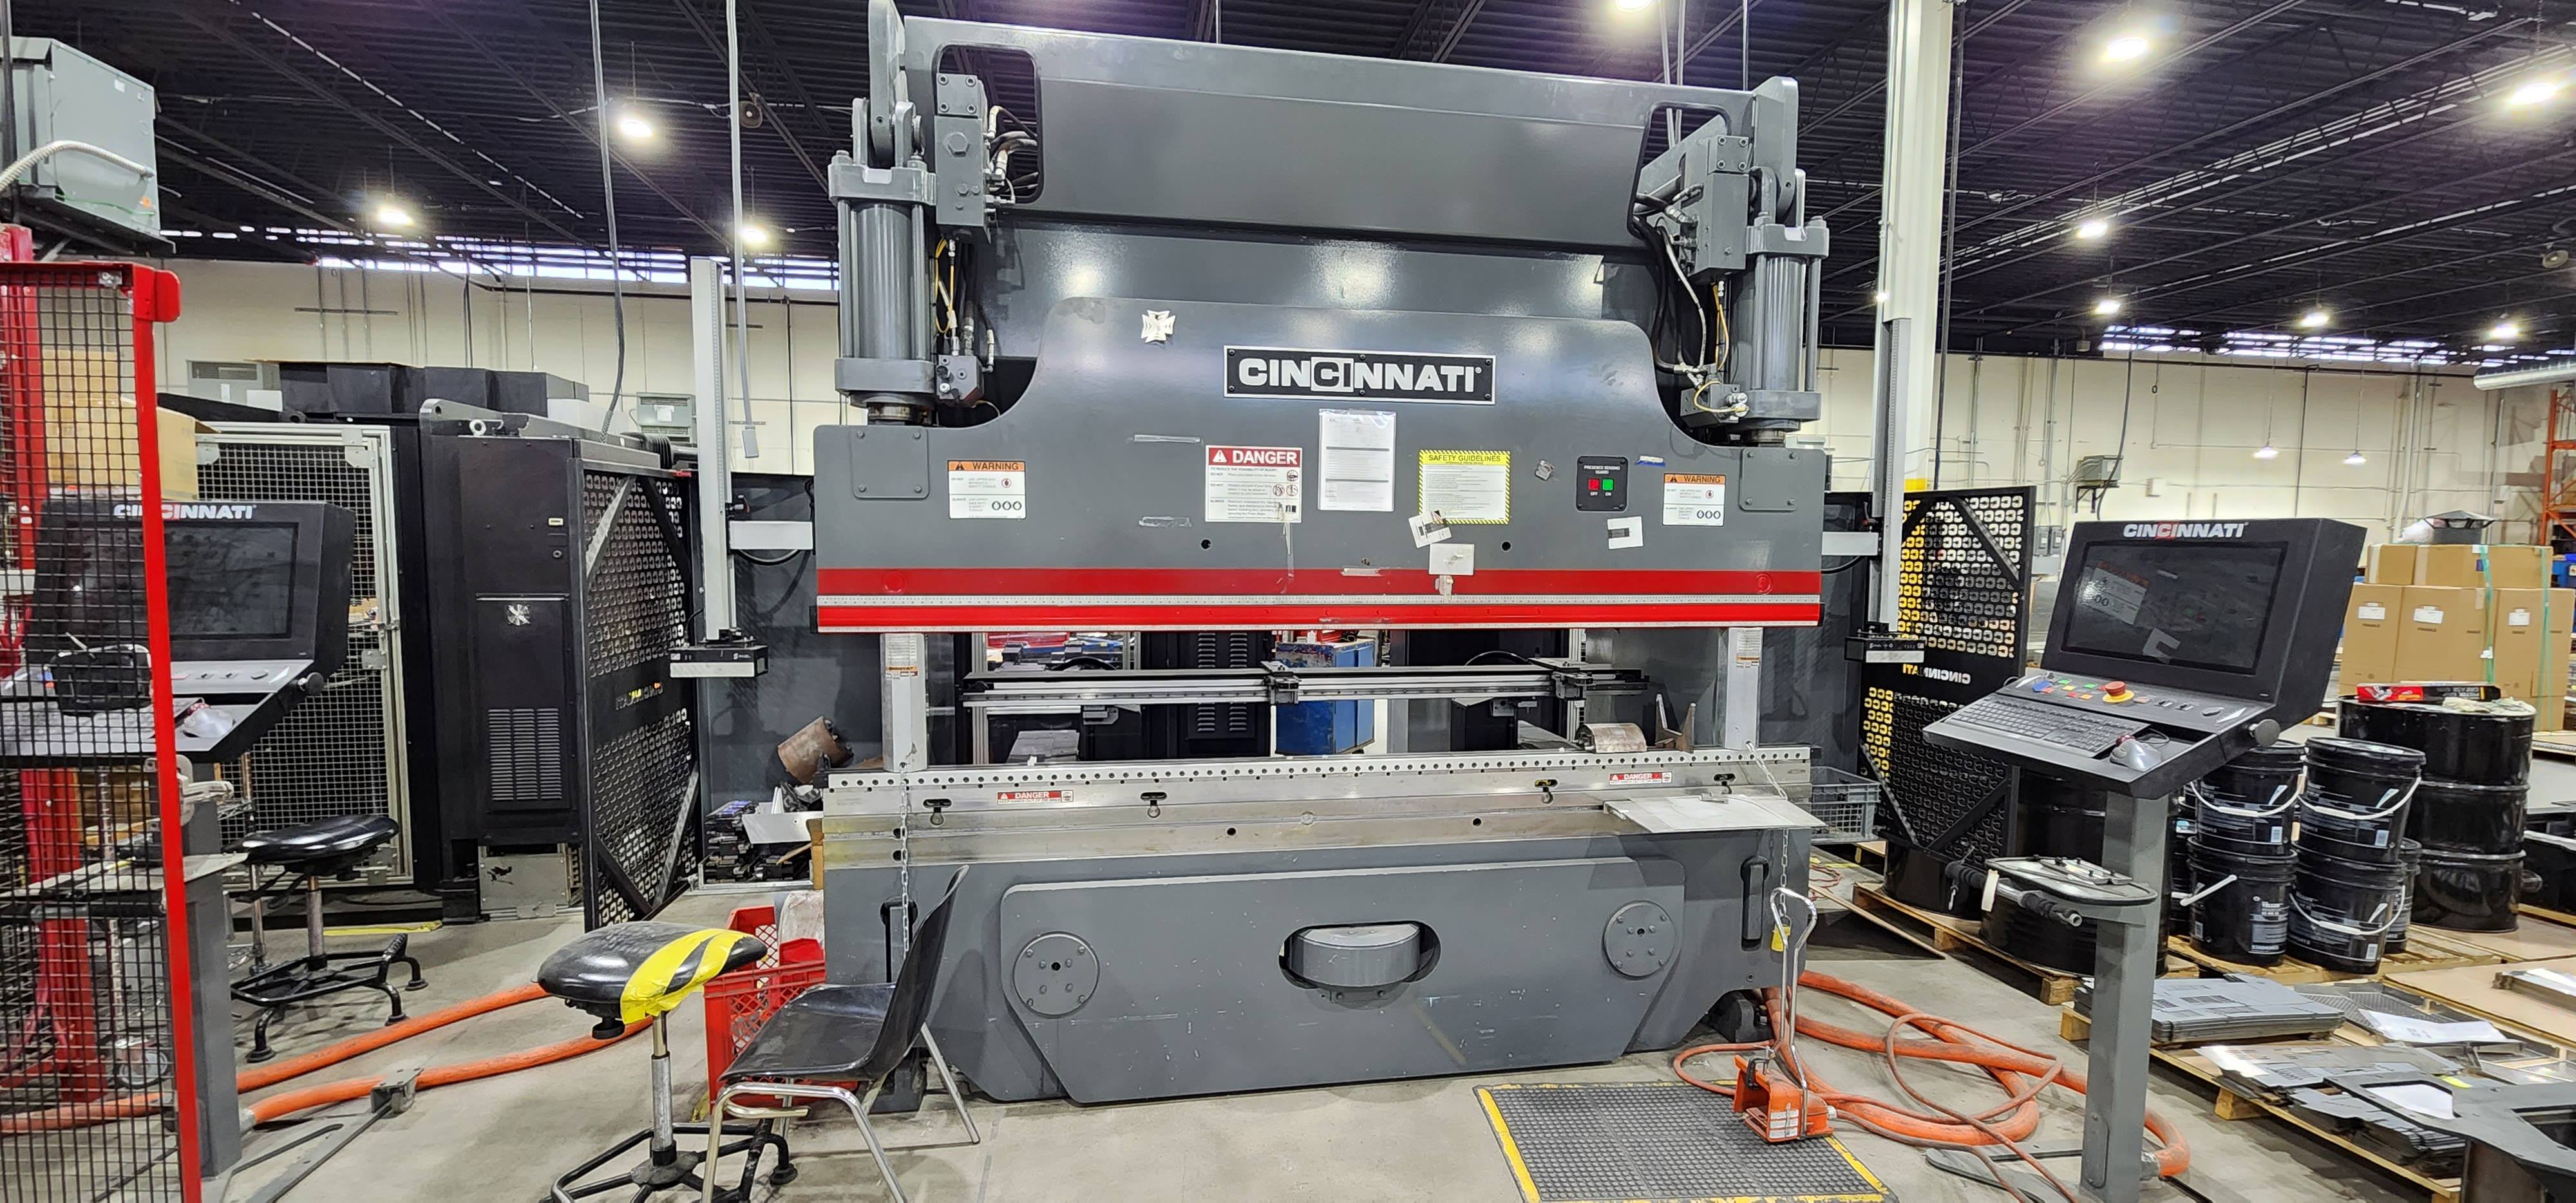 2018 Cincinnati CNC Press Brake Model 90PF+8